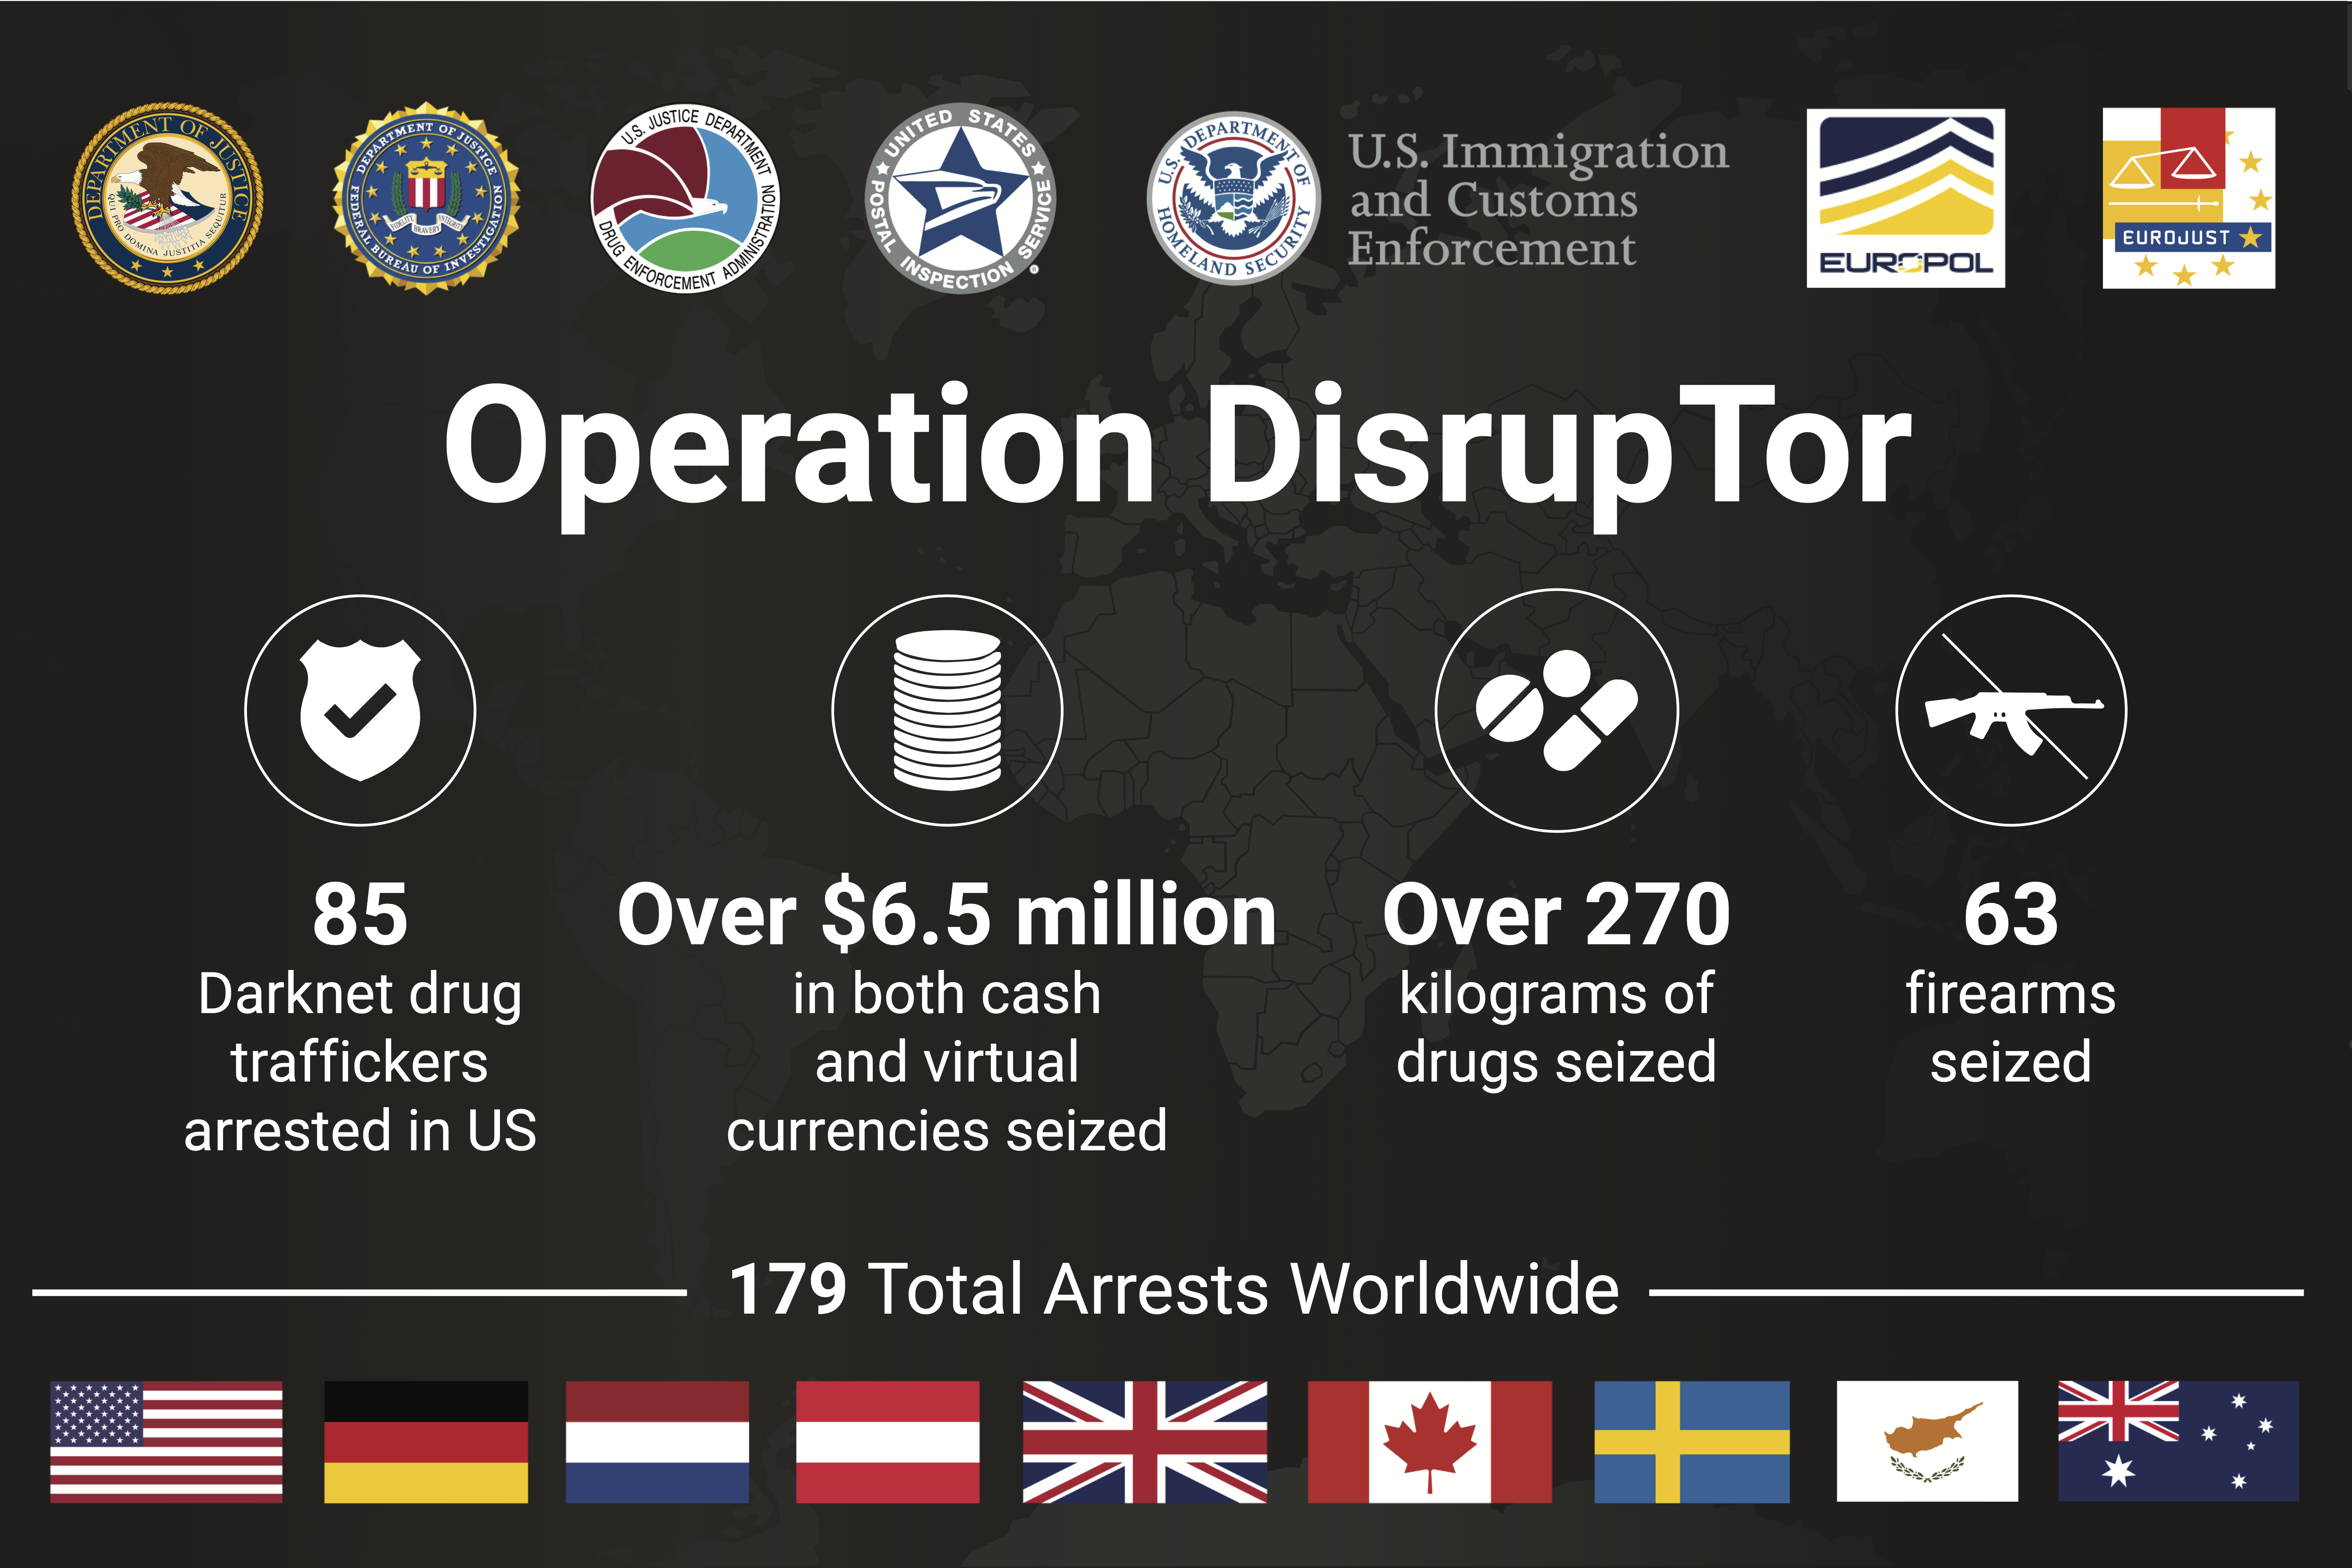 Summary slide for Operation DisrupTor